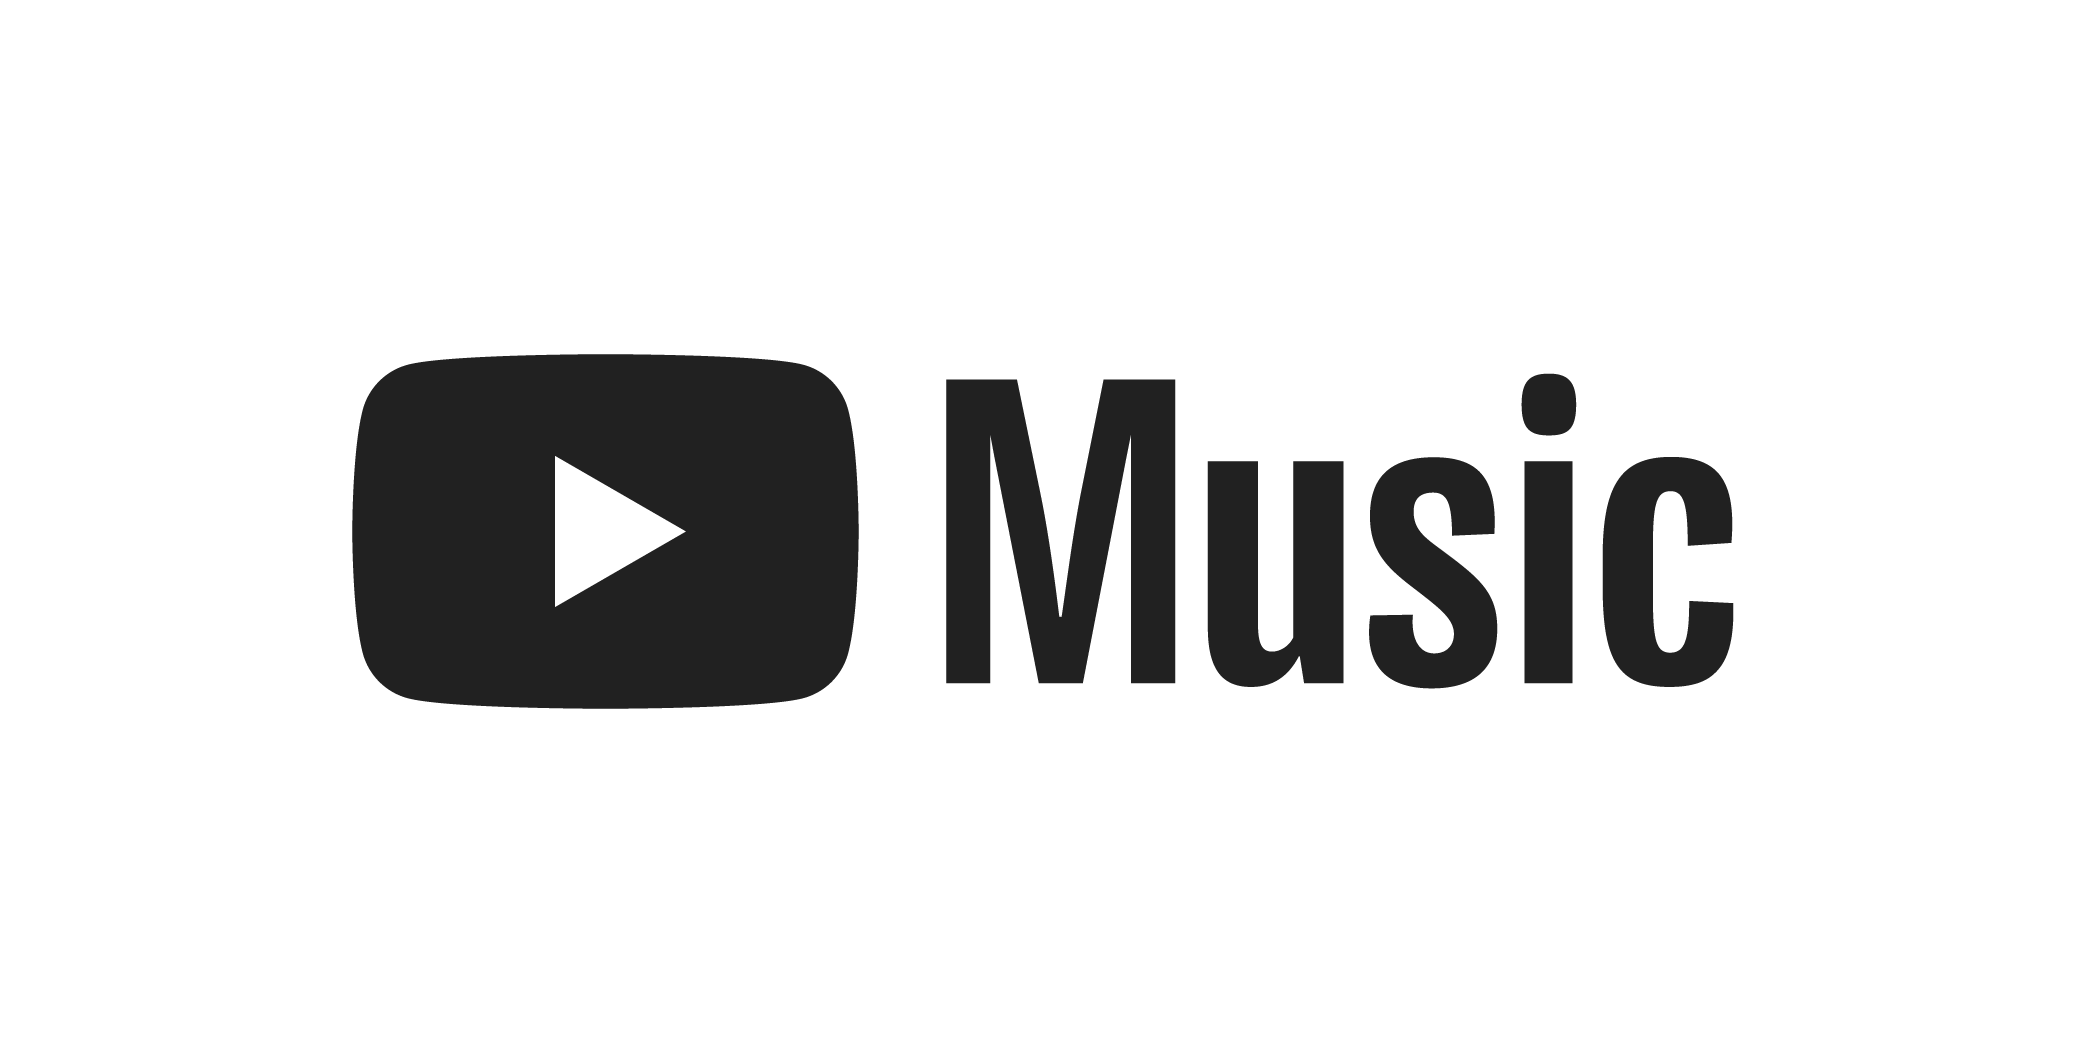 Youtube music playlist. Youtube Music логотип. Ютуб музыка иконка. Ютуб музыка логотип. Музыкальный логотип.